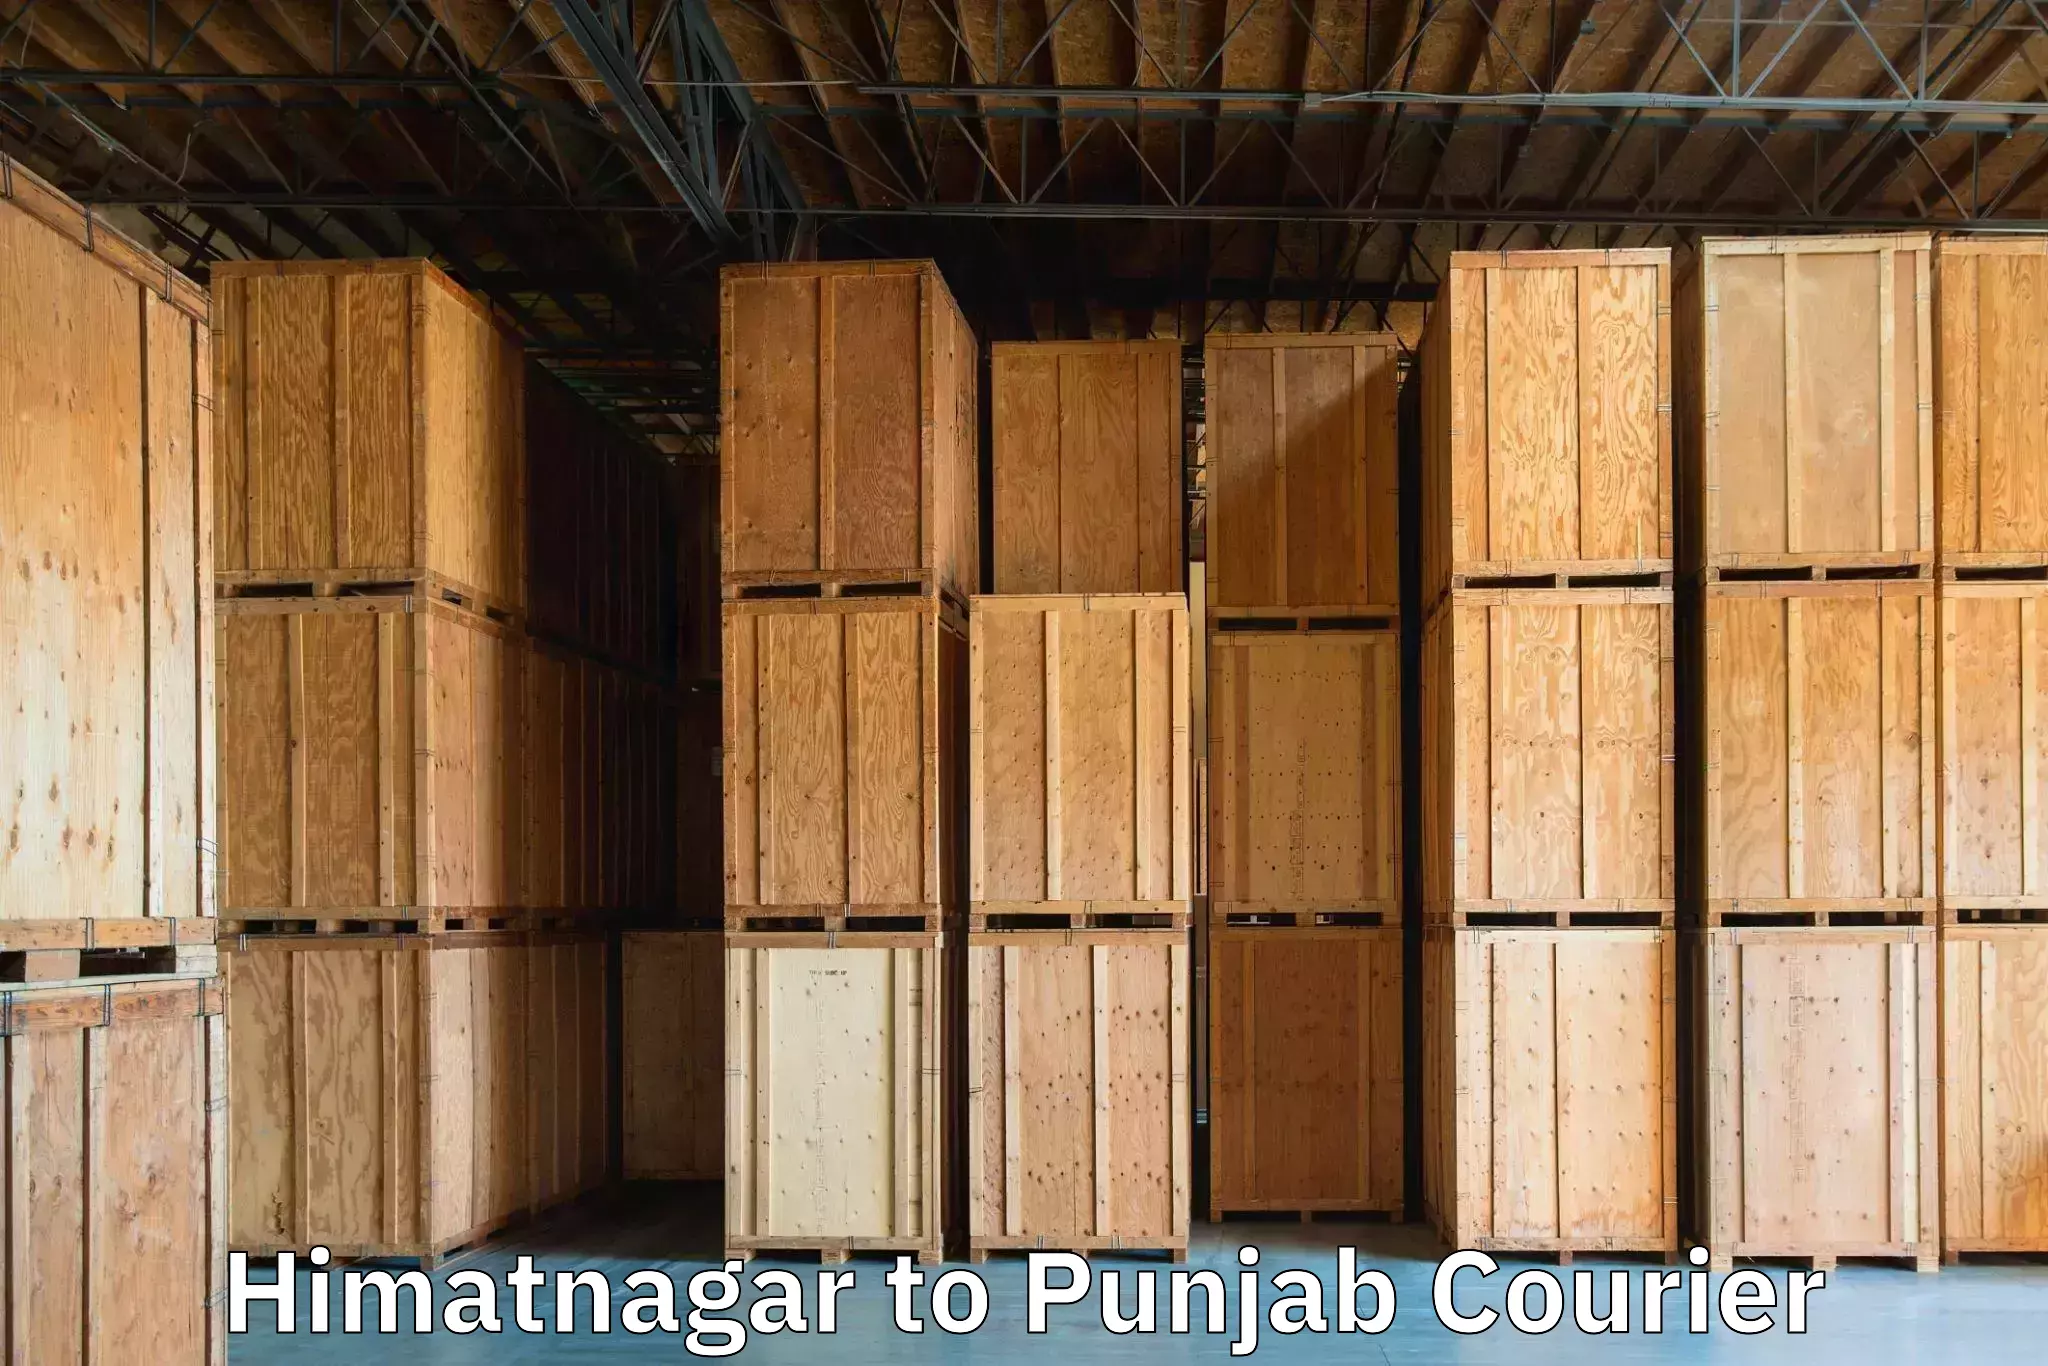 Luggage shipment specialists Himatnagar to Sangrur